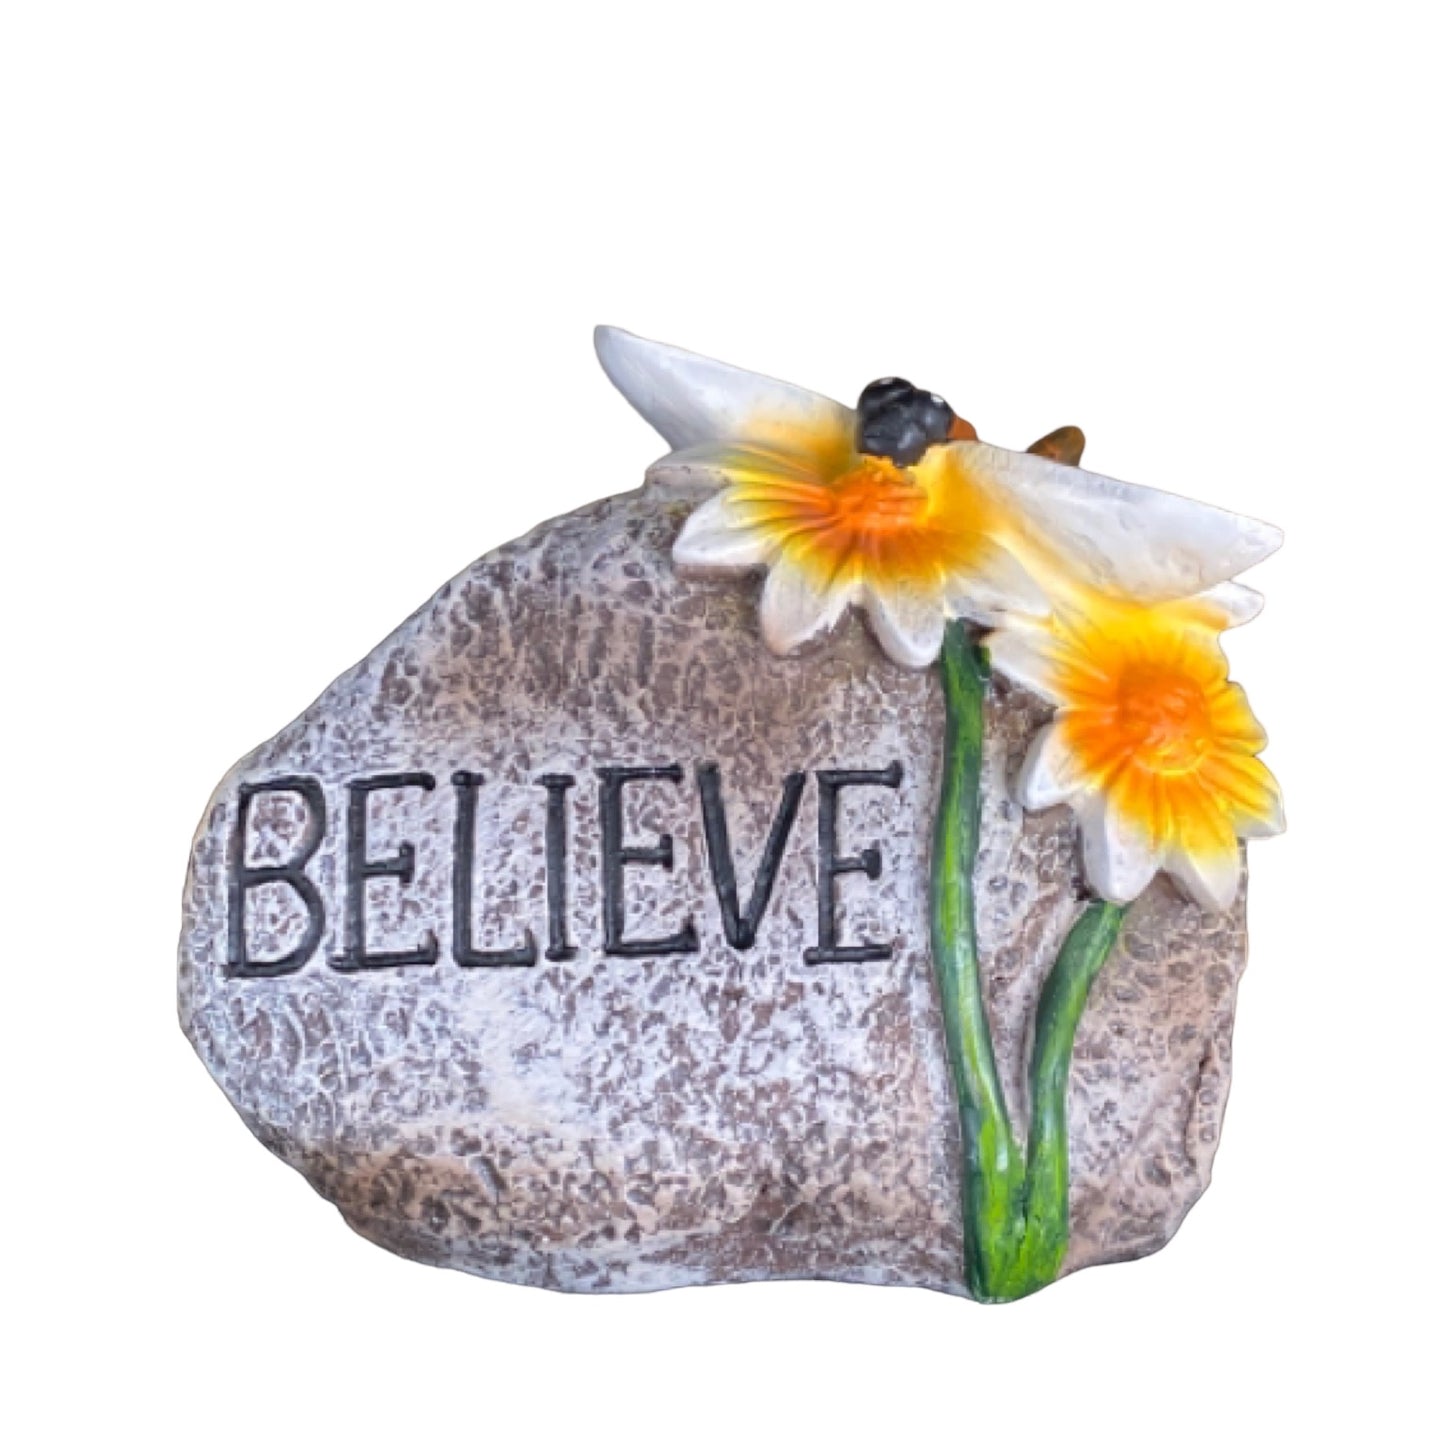 Garden Believe Gardener Stone Goatmilk Soap Gift - The Renmy Store Homewares & Gifts 